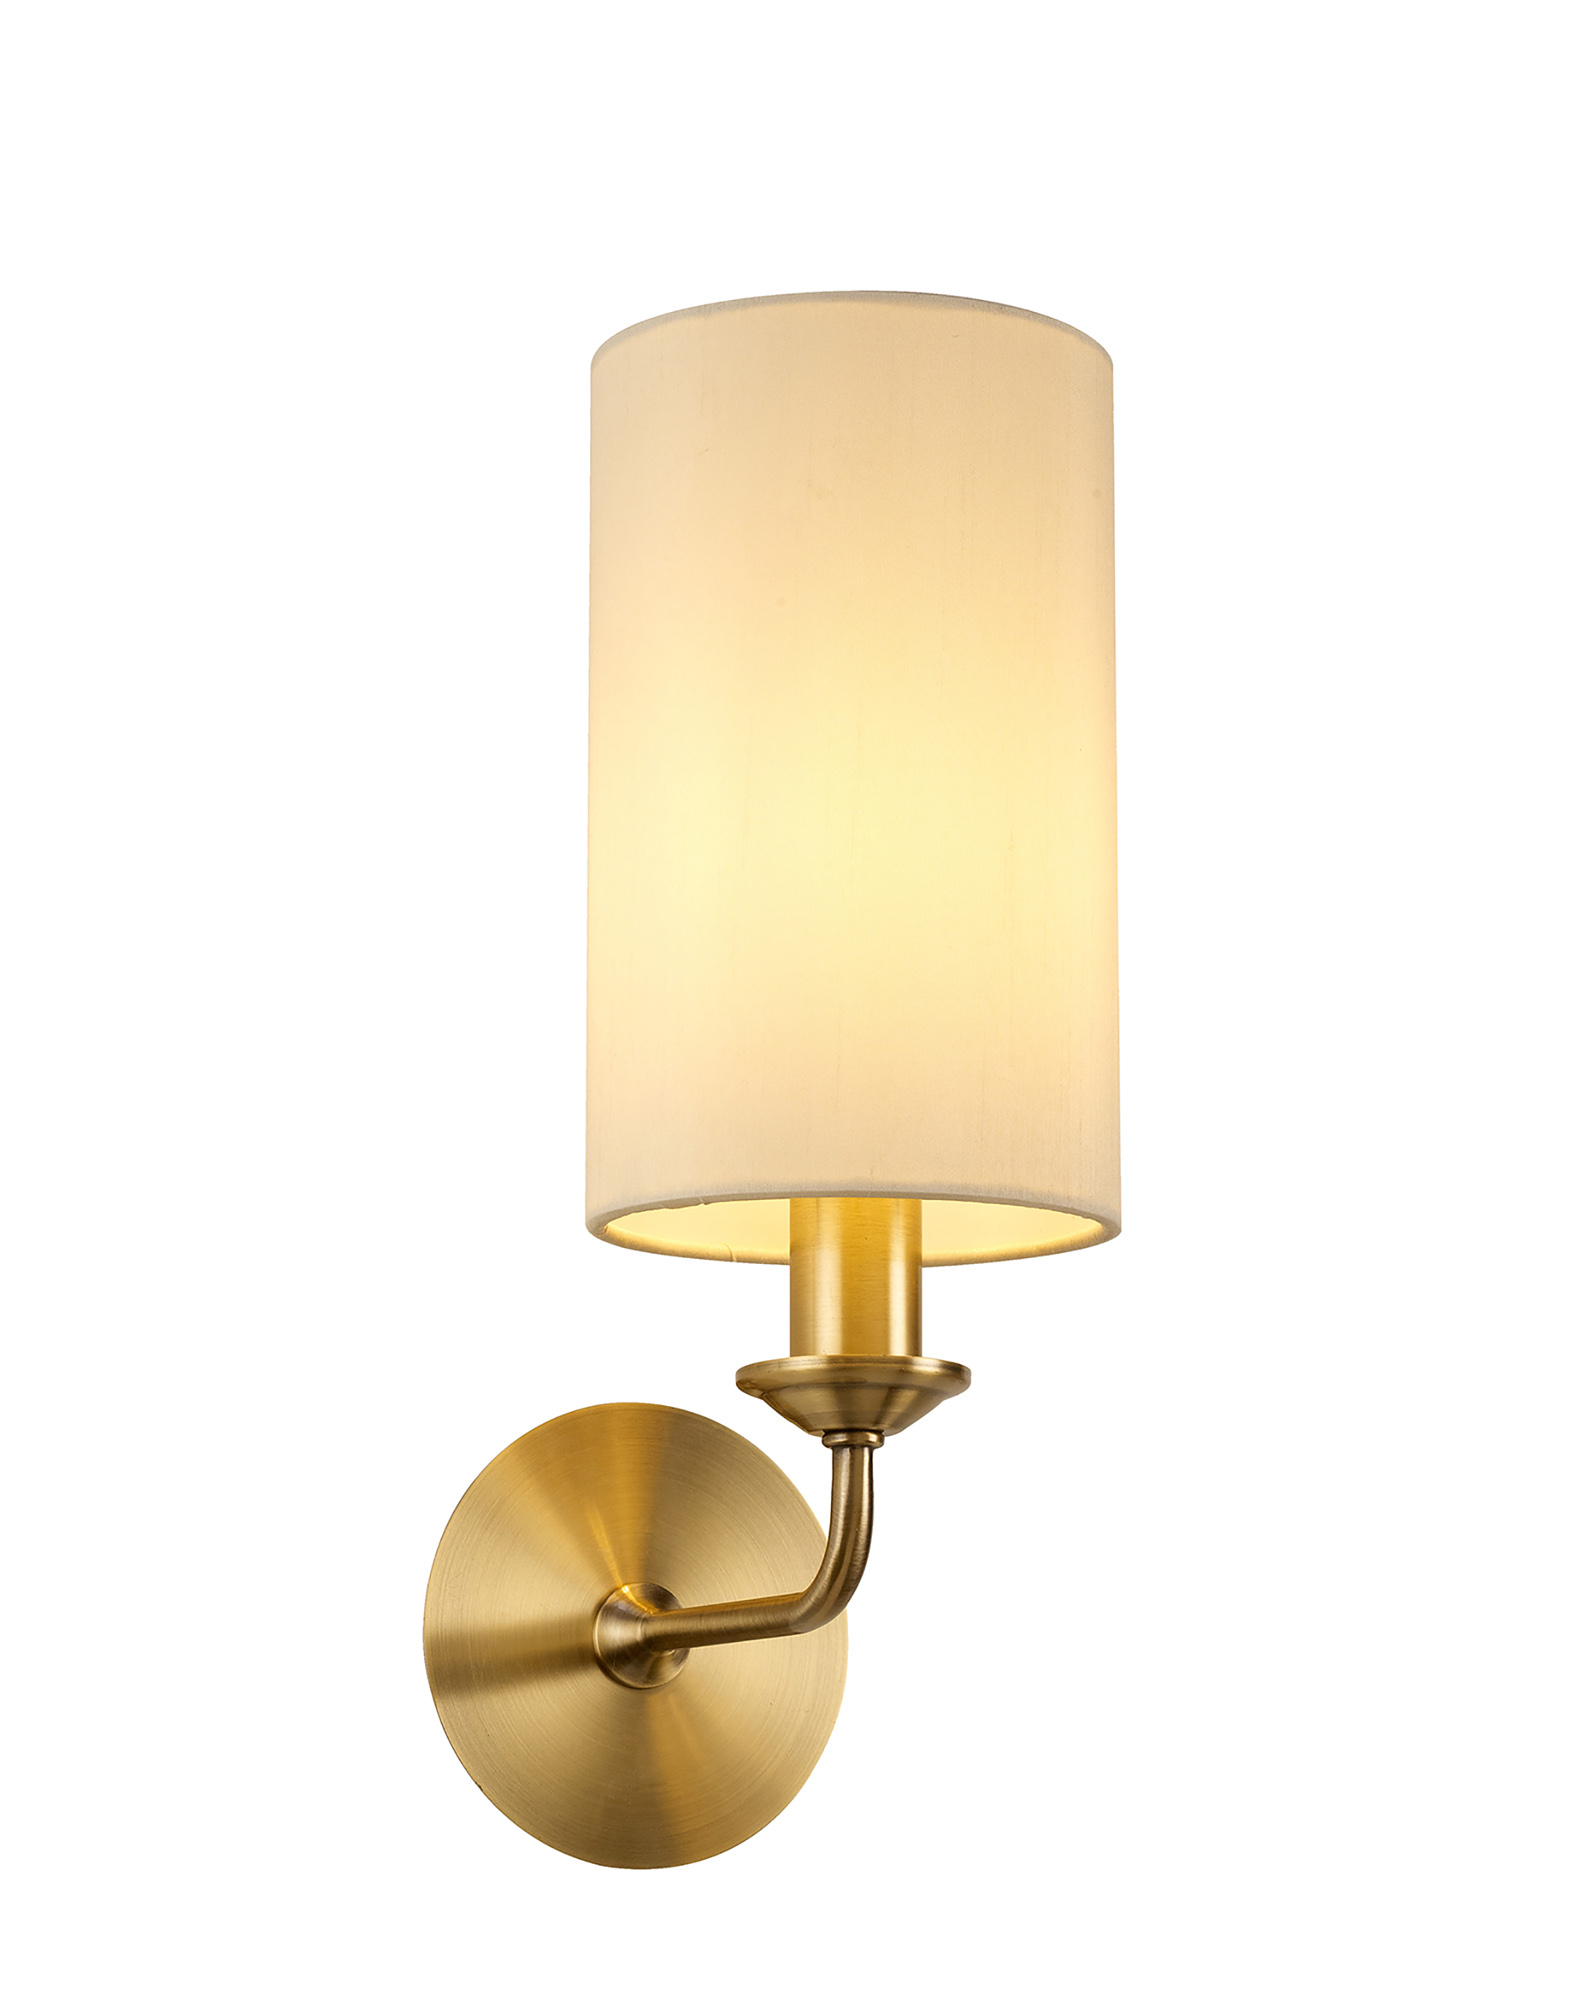 DK0038  Banyan Wall Lamp 1 Light Antique Brass, Ivory Pearl